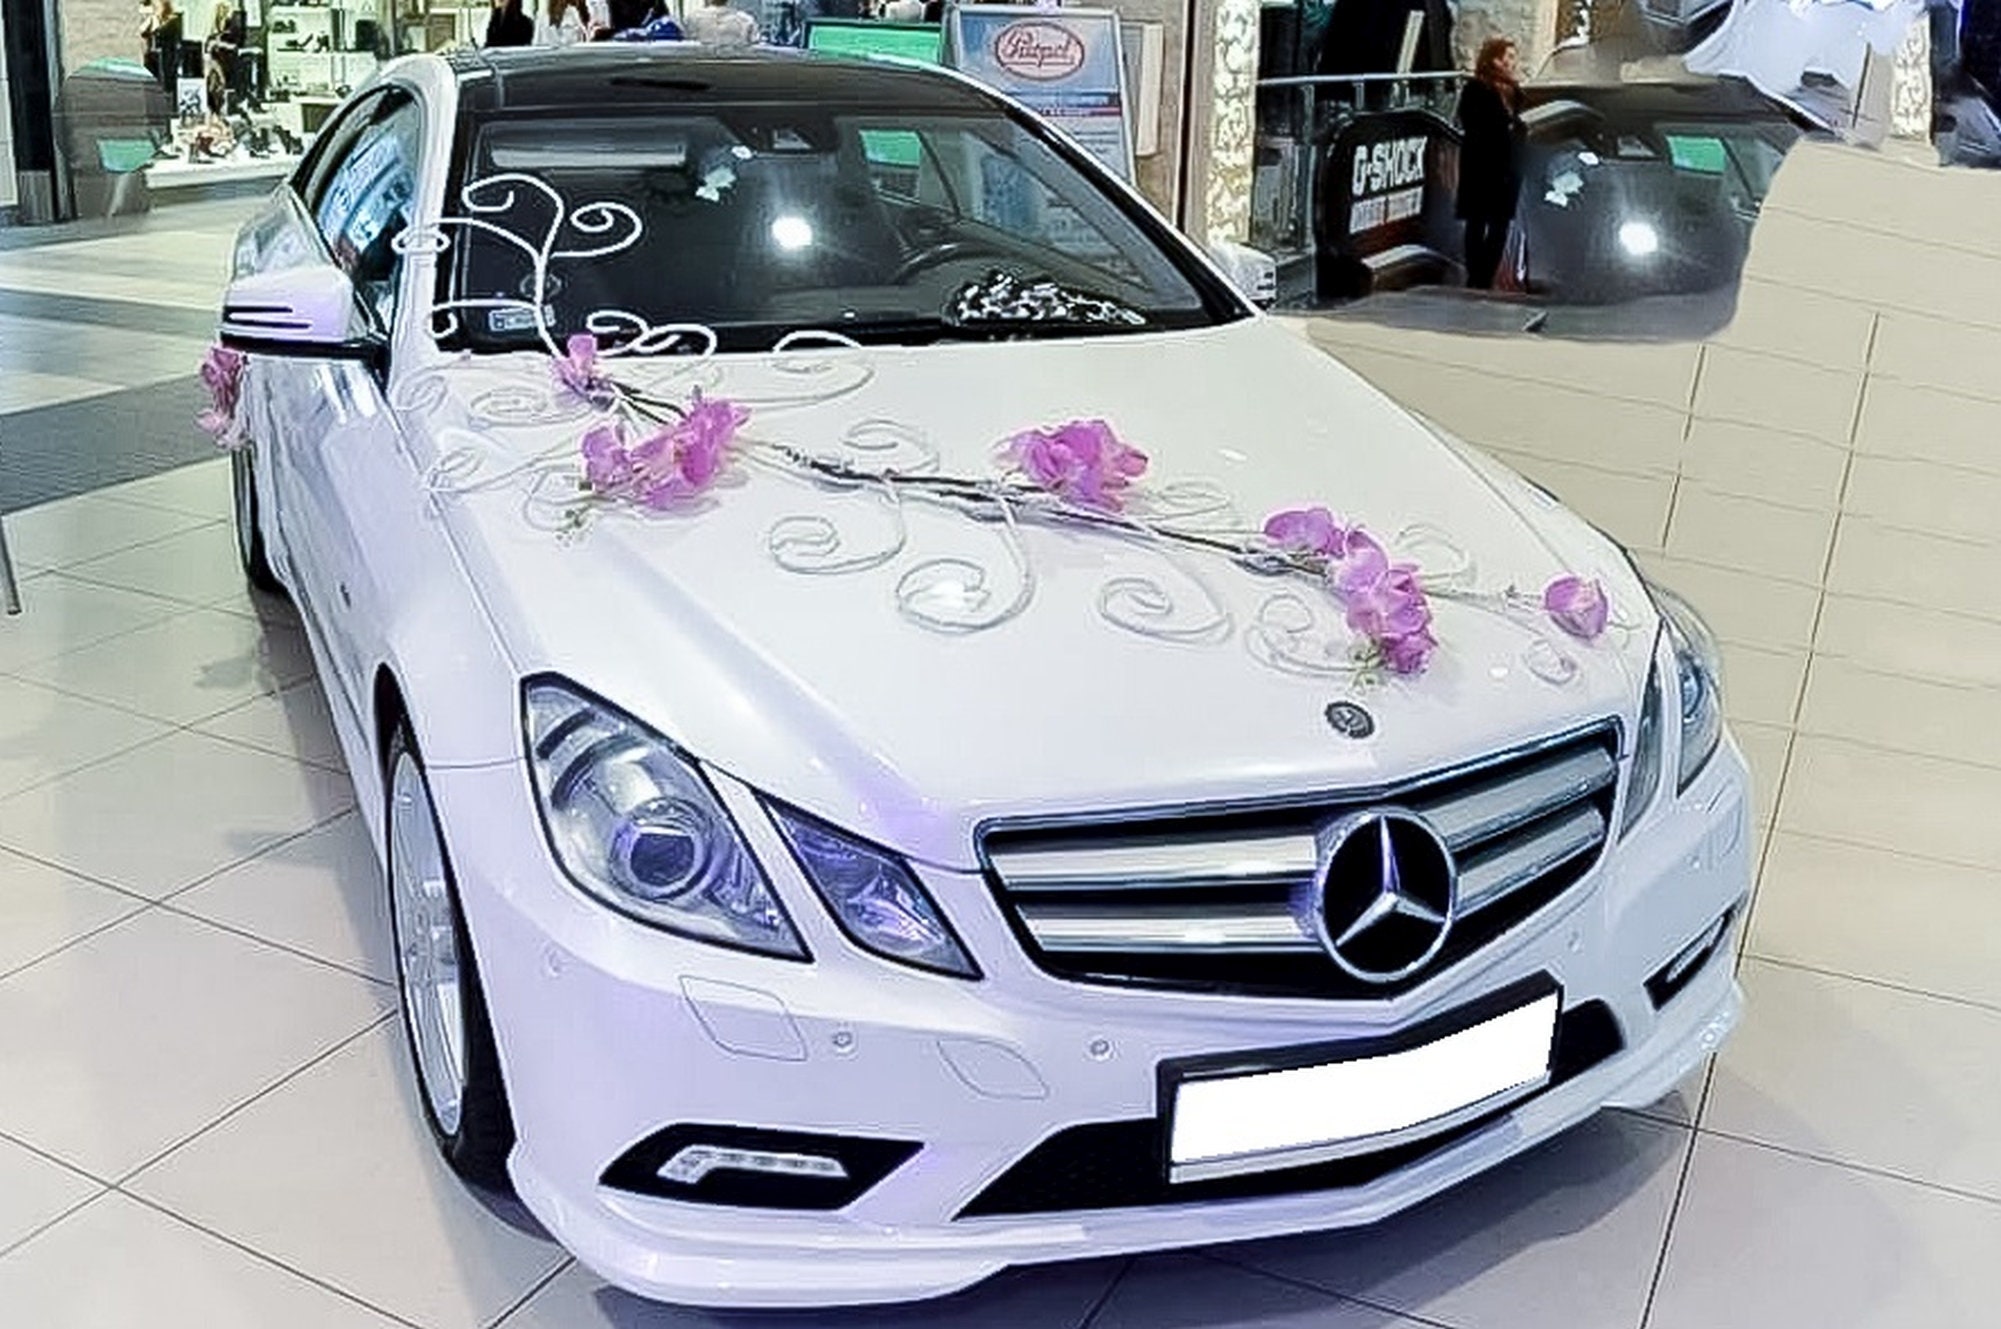 WEDDING CAR DECORATION KIT Wedding Fair Event Car Decoration DECORATIONS  SET